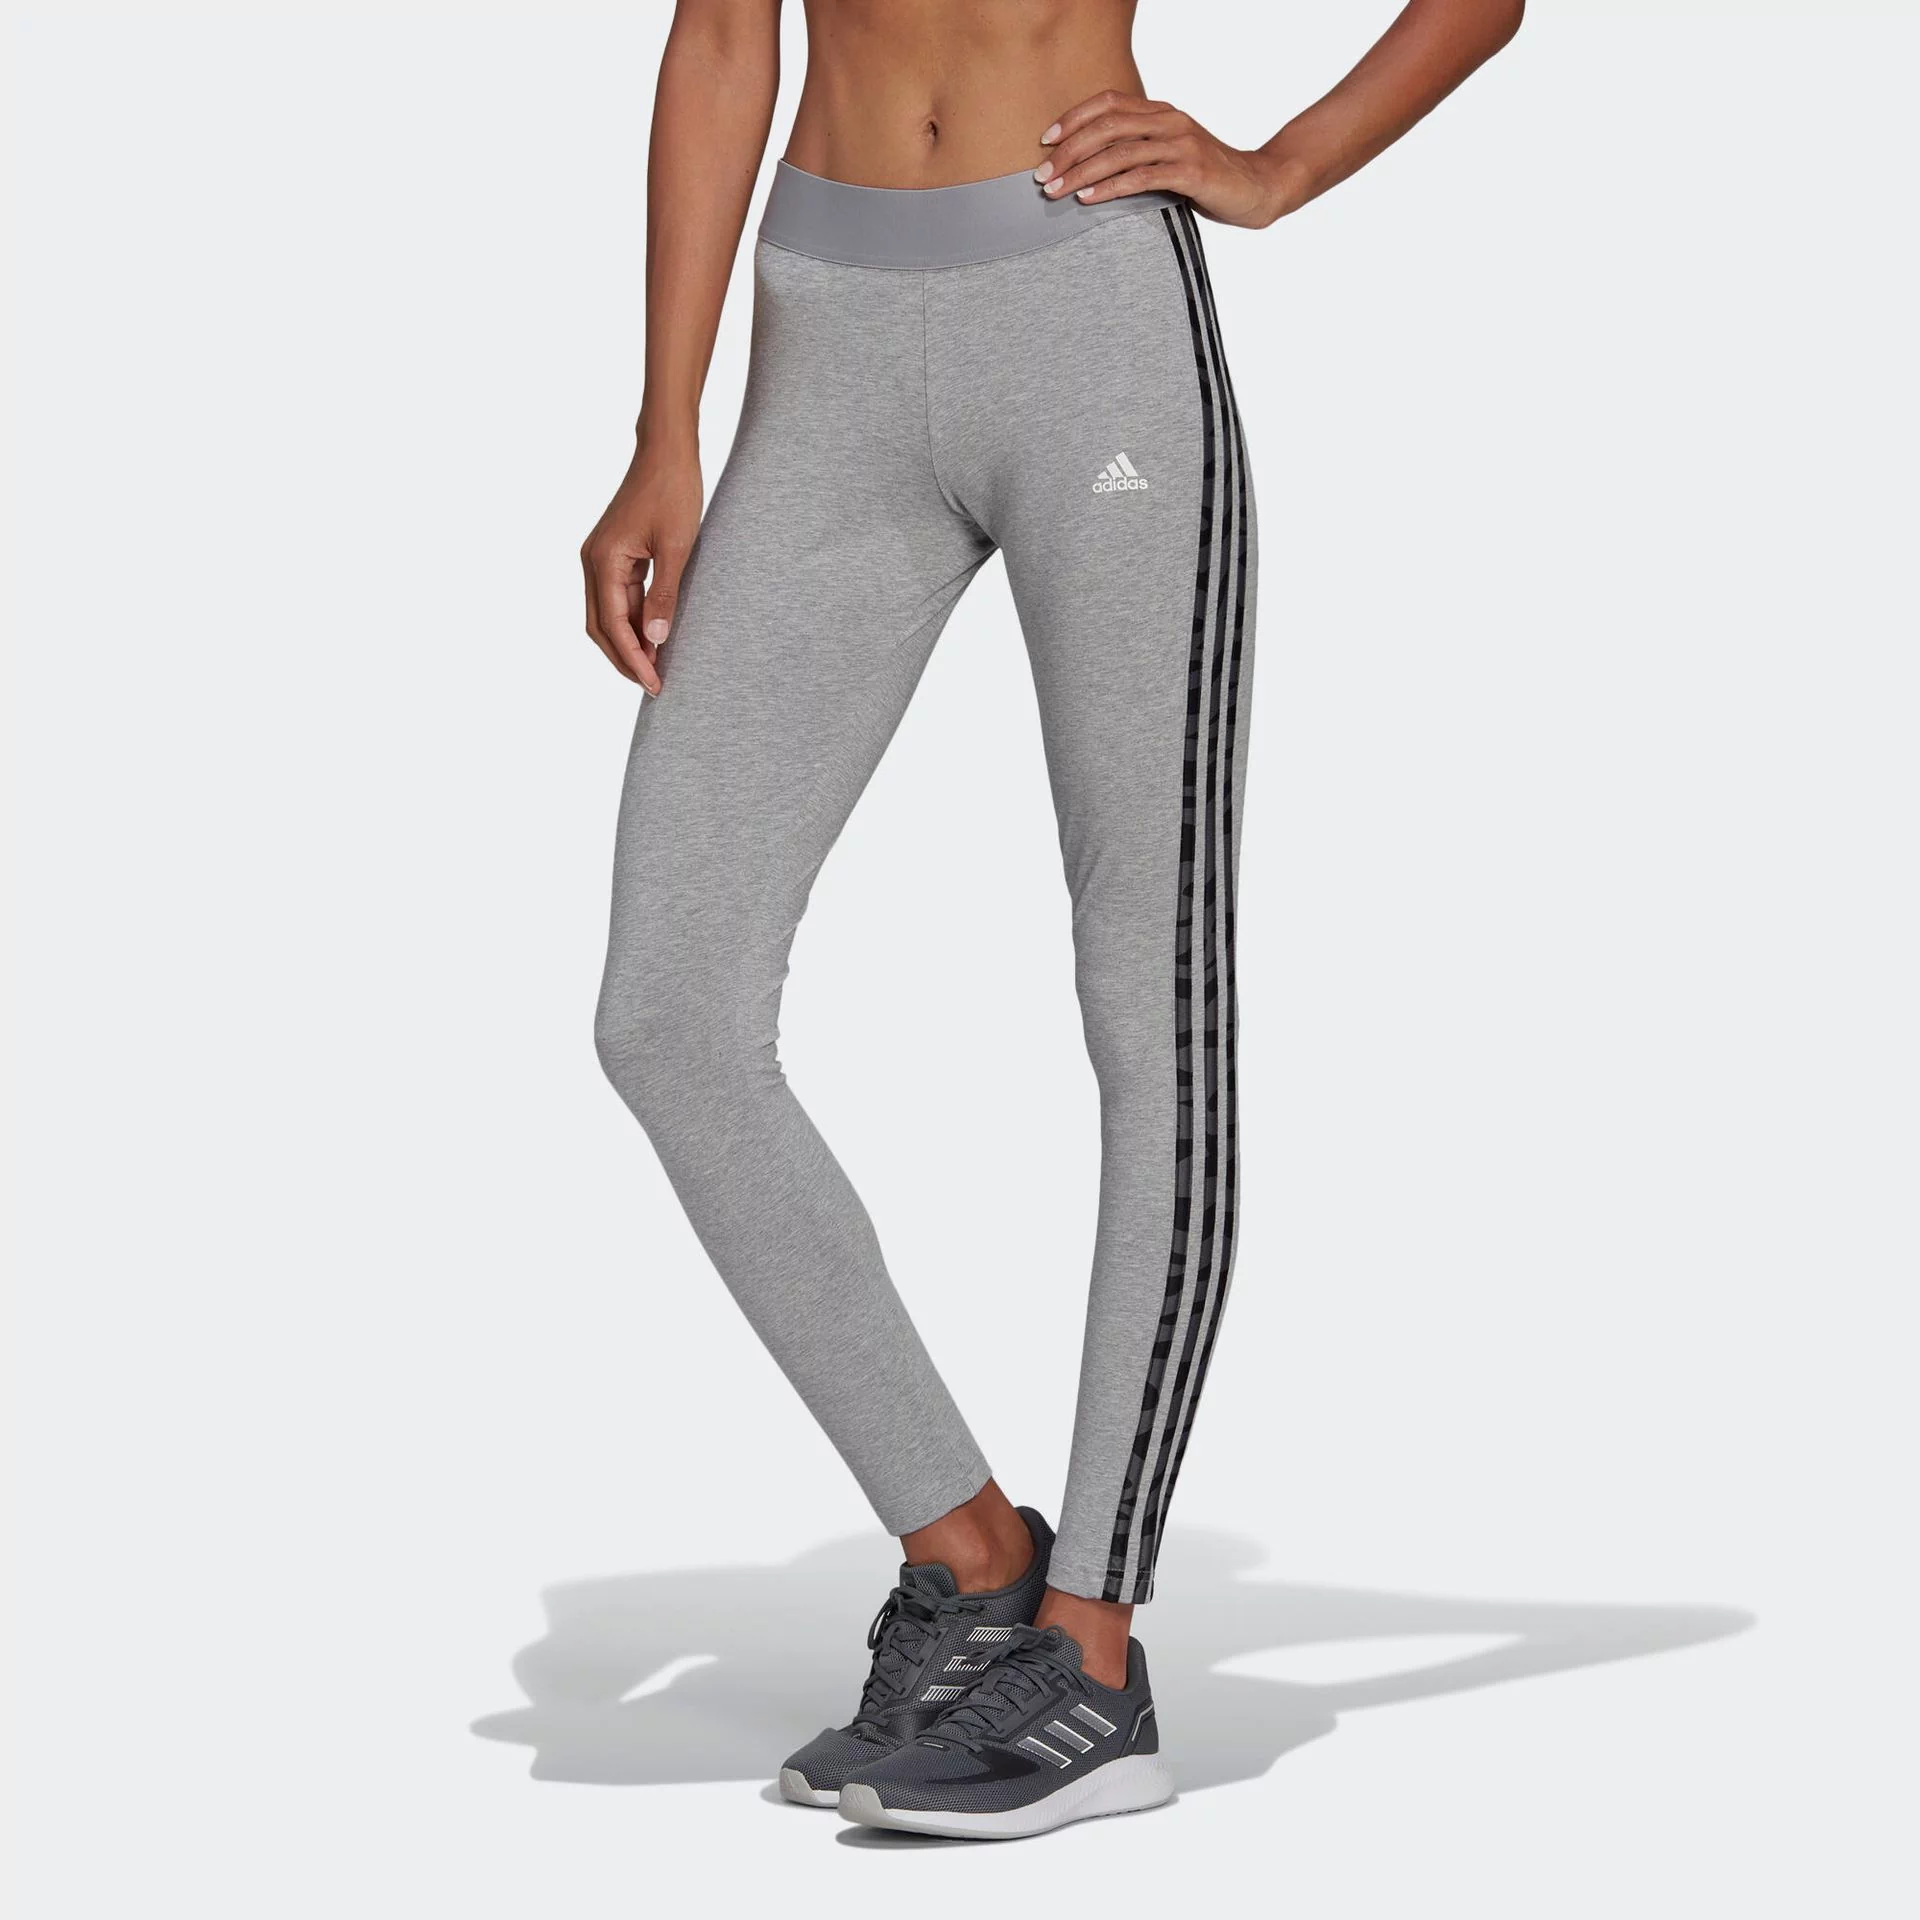 Legginsy fitness damskie Adidas 3S Essential - Ceny i opinie na Skapiec.pl